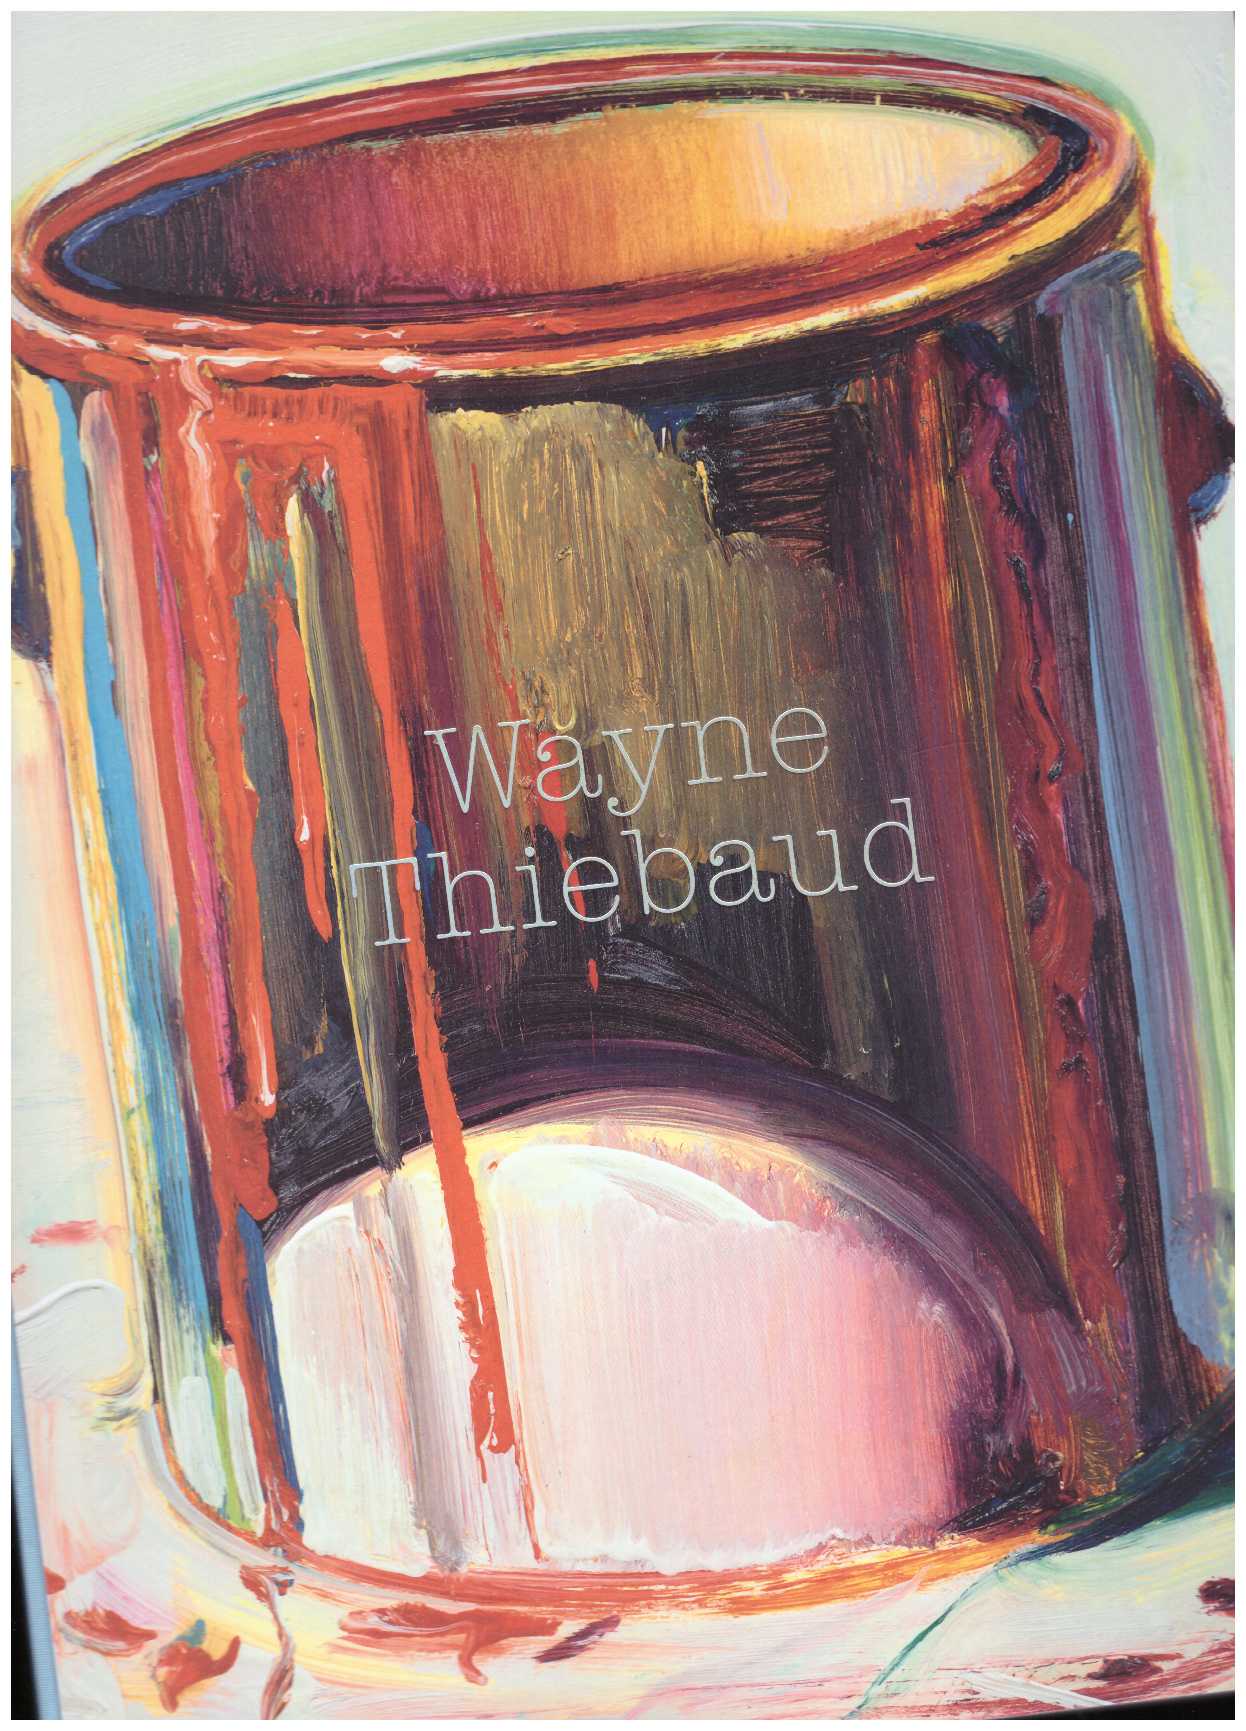 THIEBAUD, Wayne; KÜSTER, Ulf (ed.) - Wayne Thiebaud